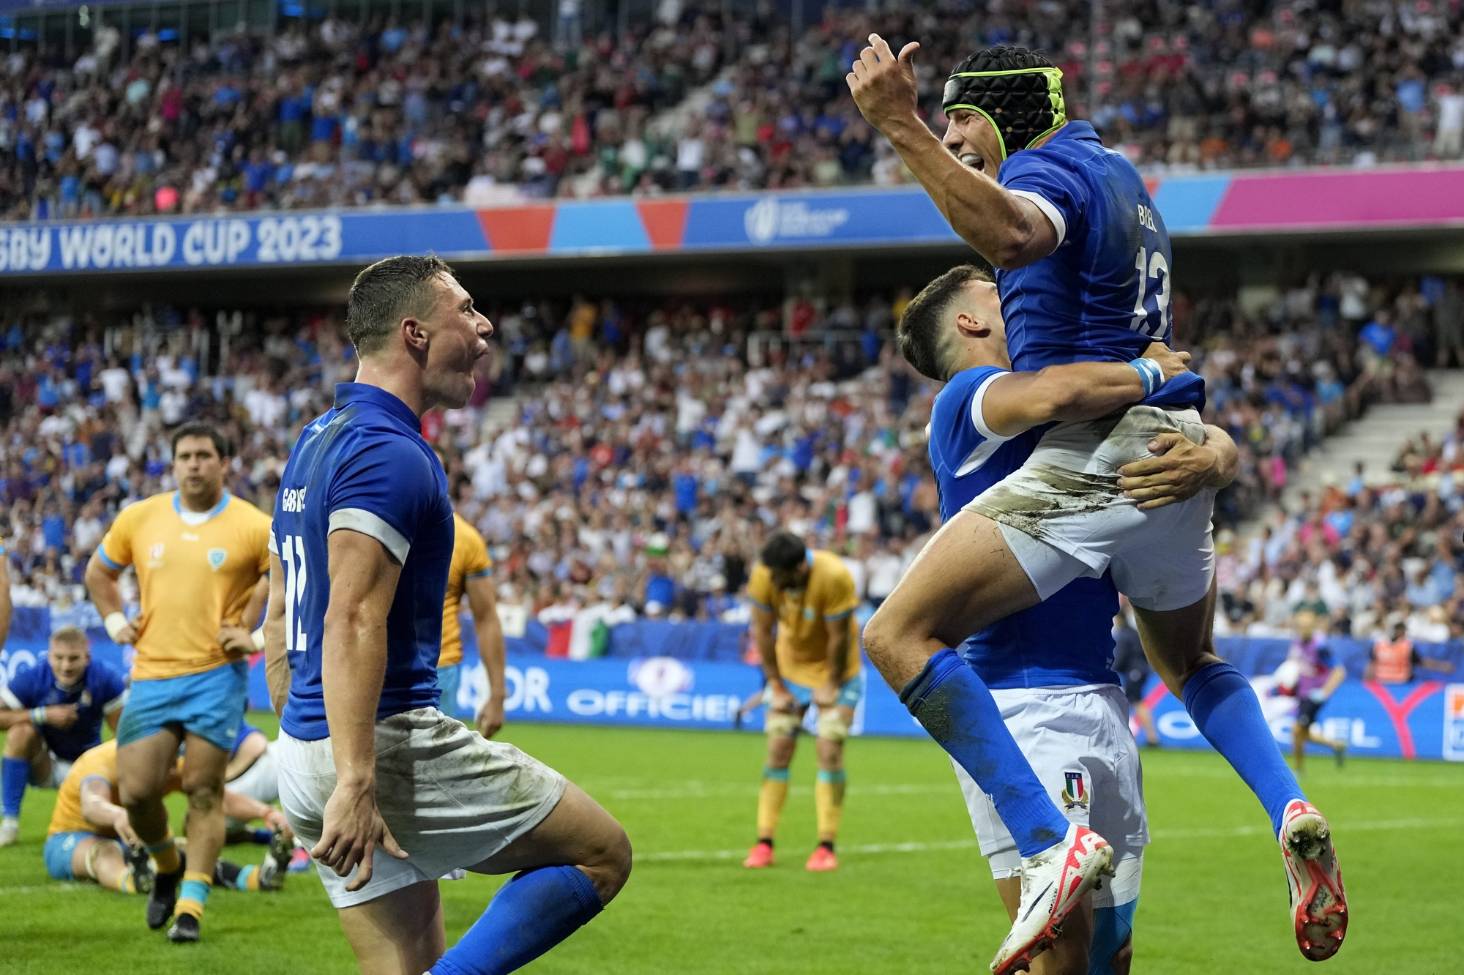 Italy's Juan Ignacio Brex, right, celebrates with teammates after scoring a try.